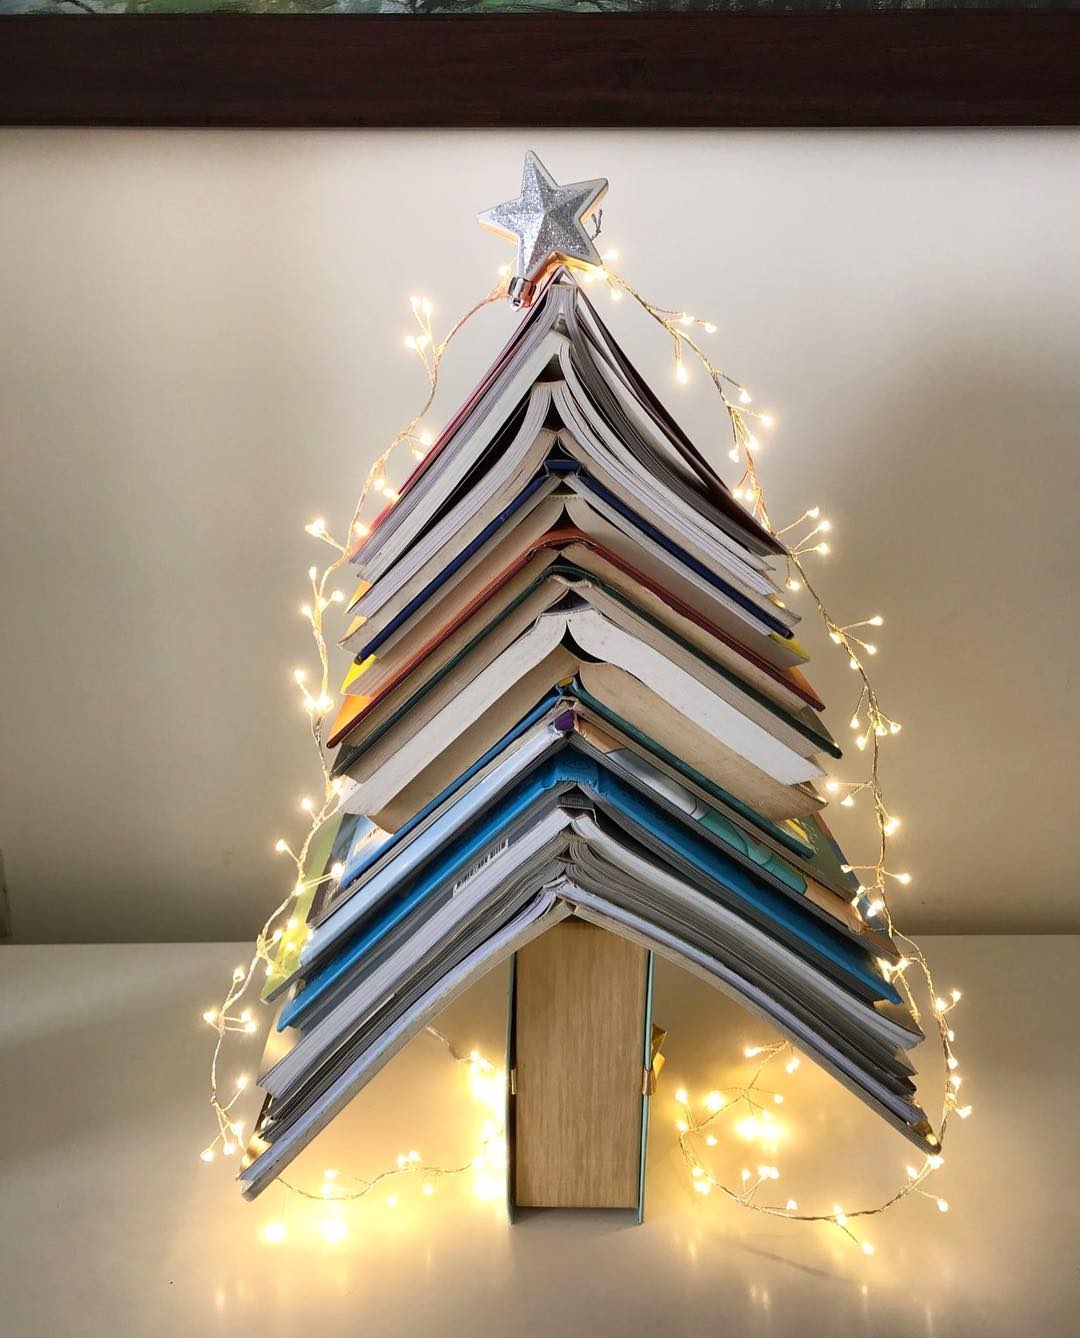 Minimalistic book Christmas tree.